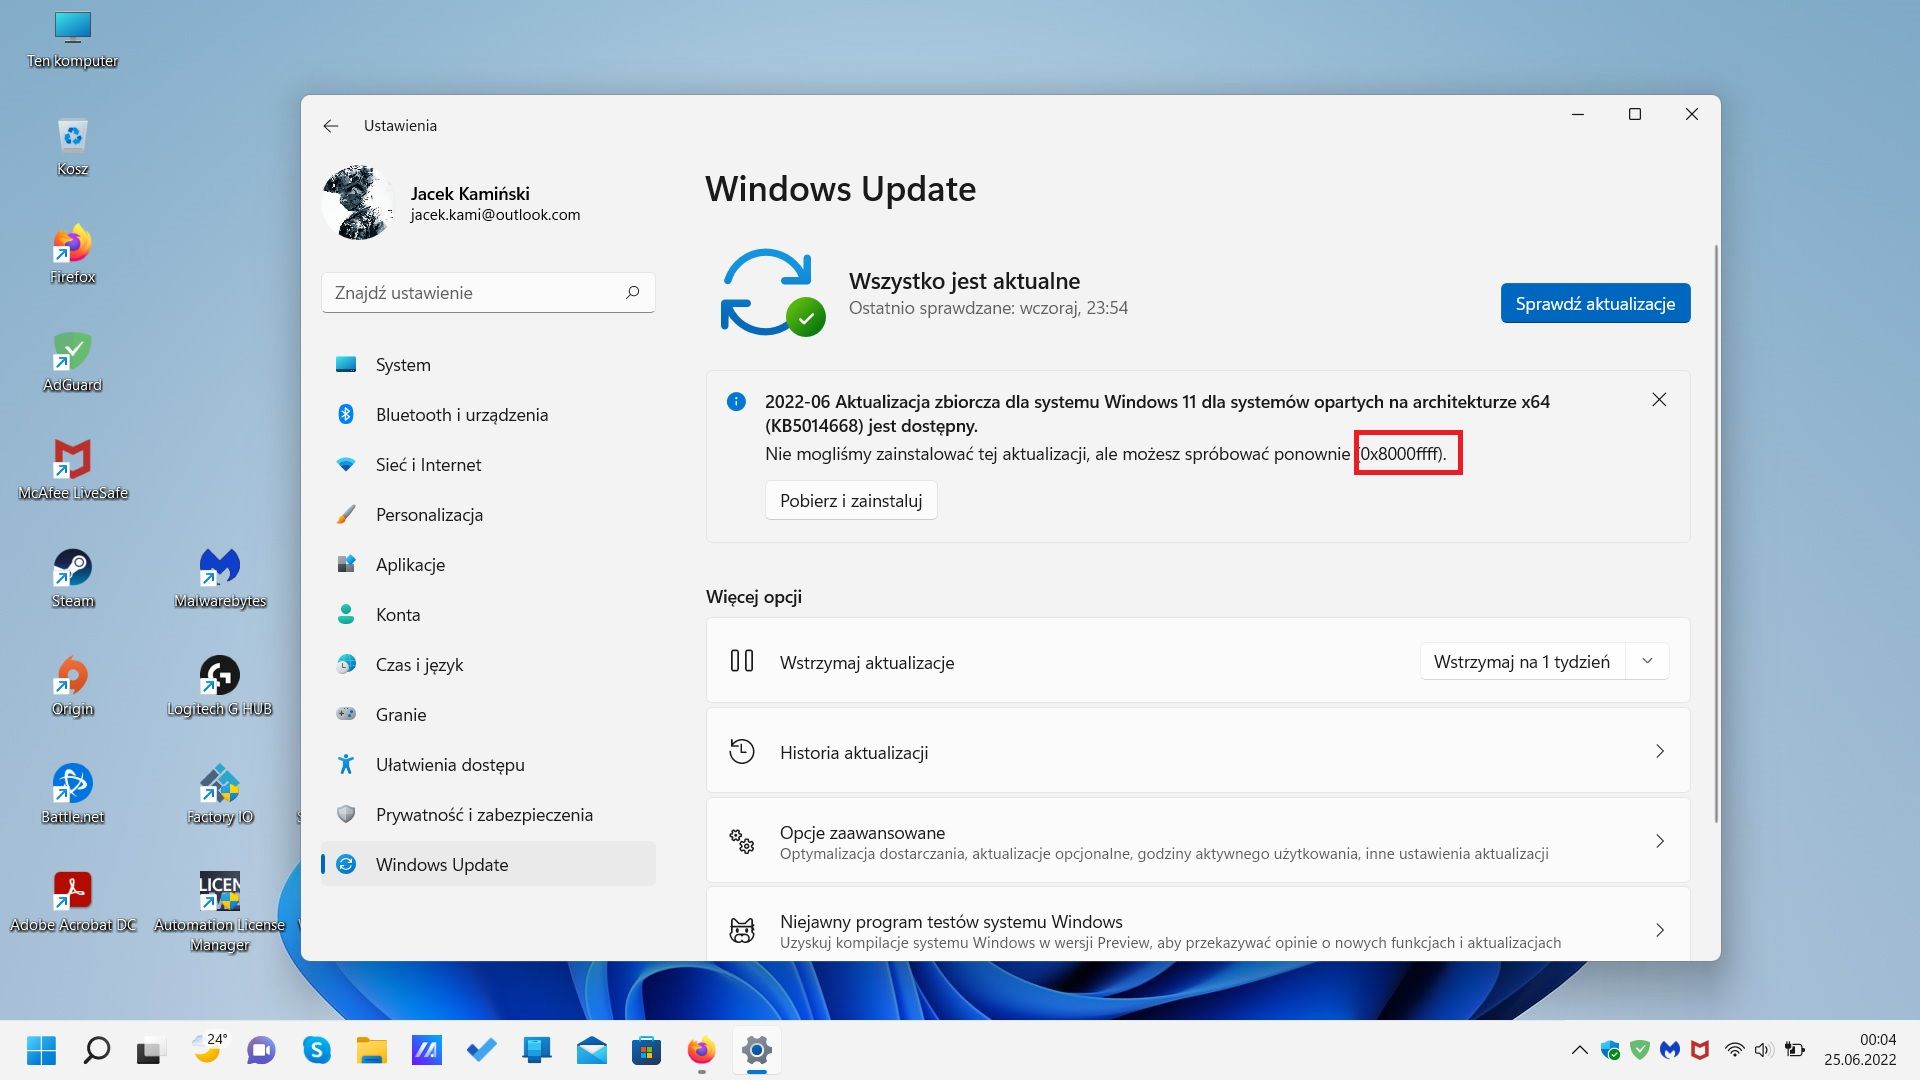 Оптимизация Windows 10